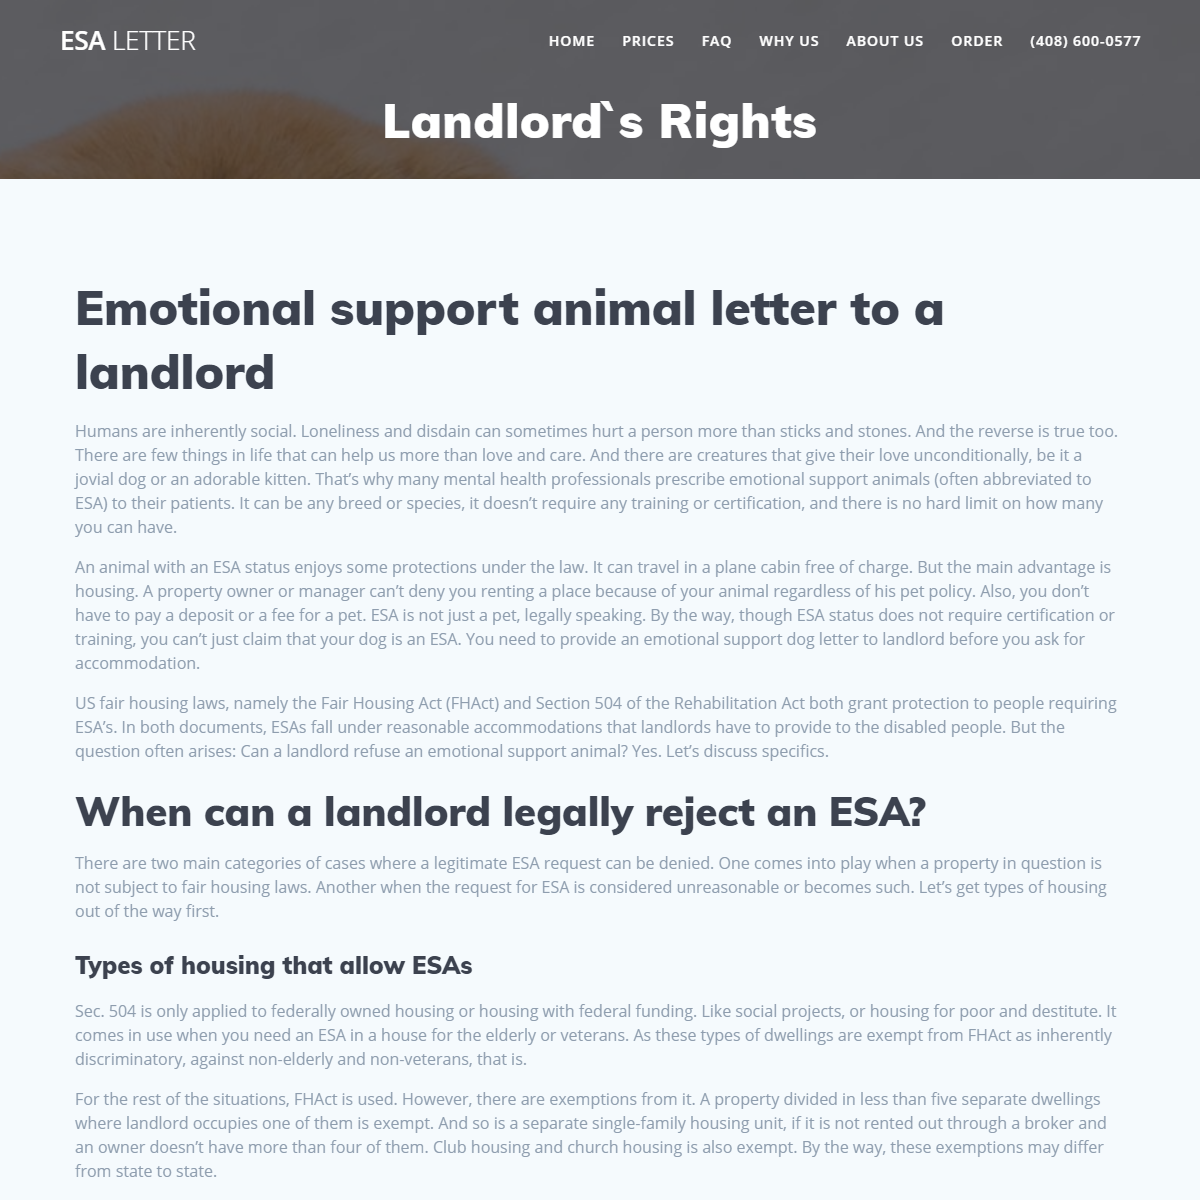 A complete backup of https://esa-letter.com/landlords-rights/